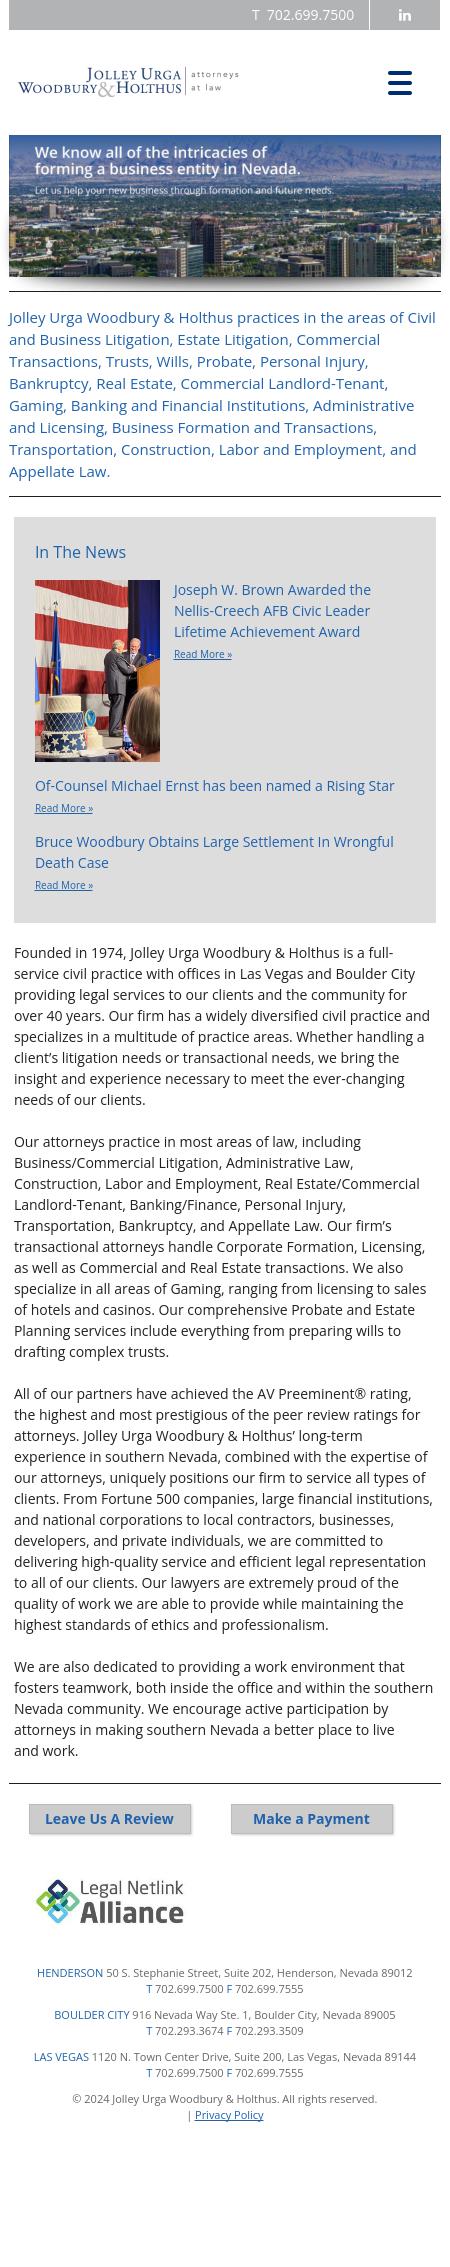 Jolley Urga Wirth Woodbury & Standish - Las Vegas NV Lawyers